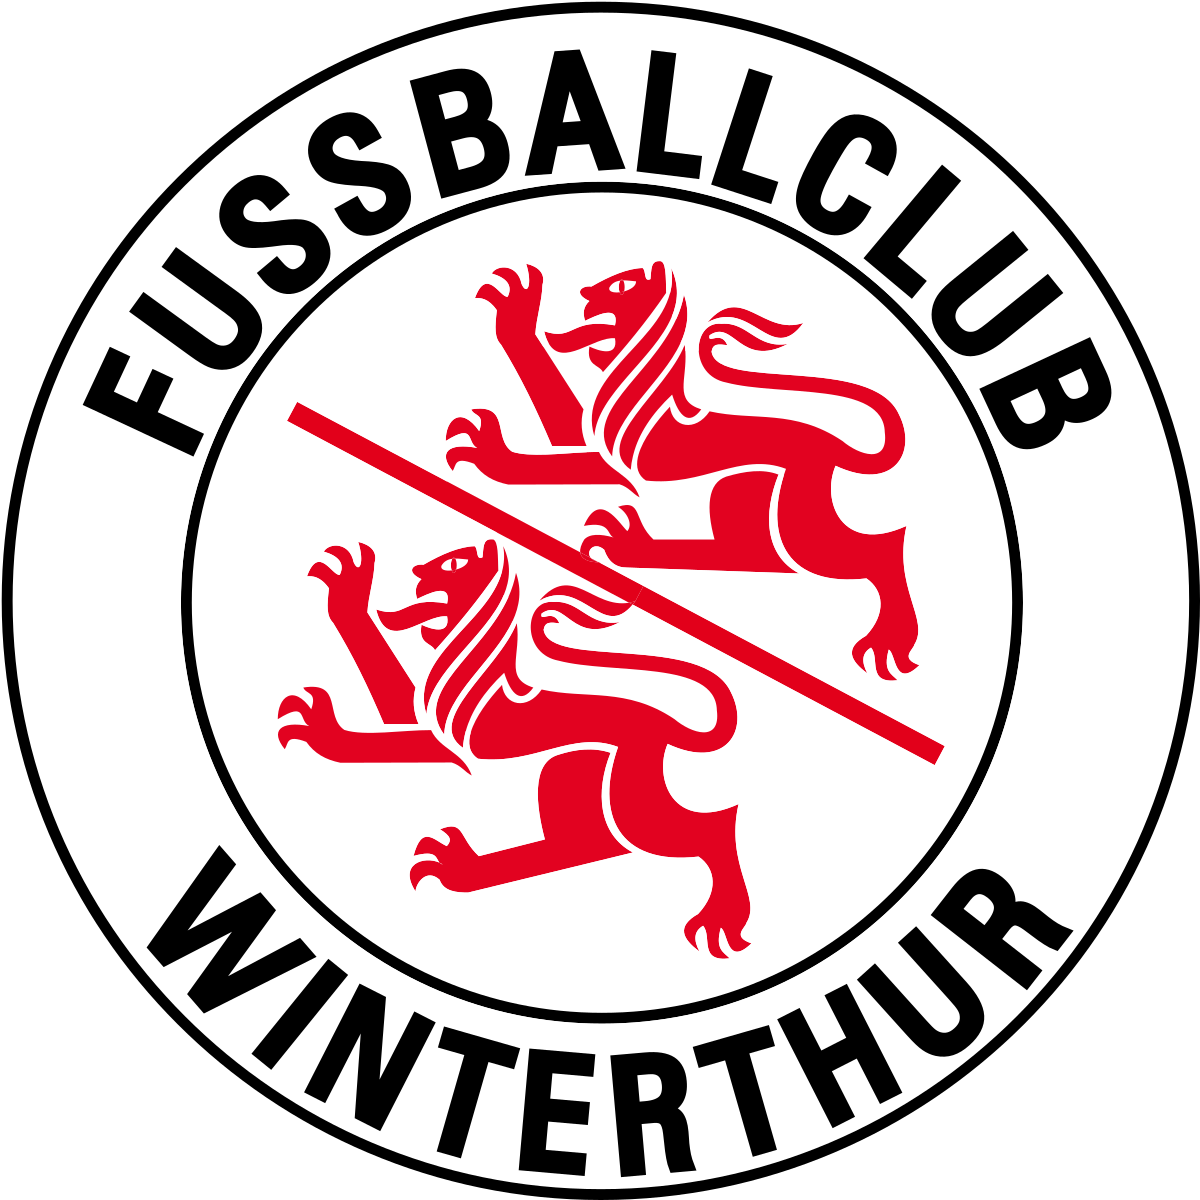 Basel vs Winterthur Prediction: Basel to win